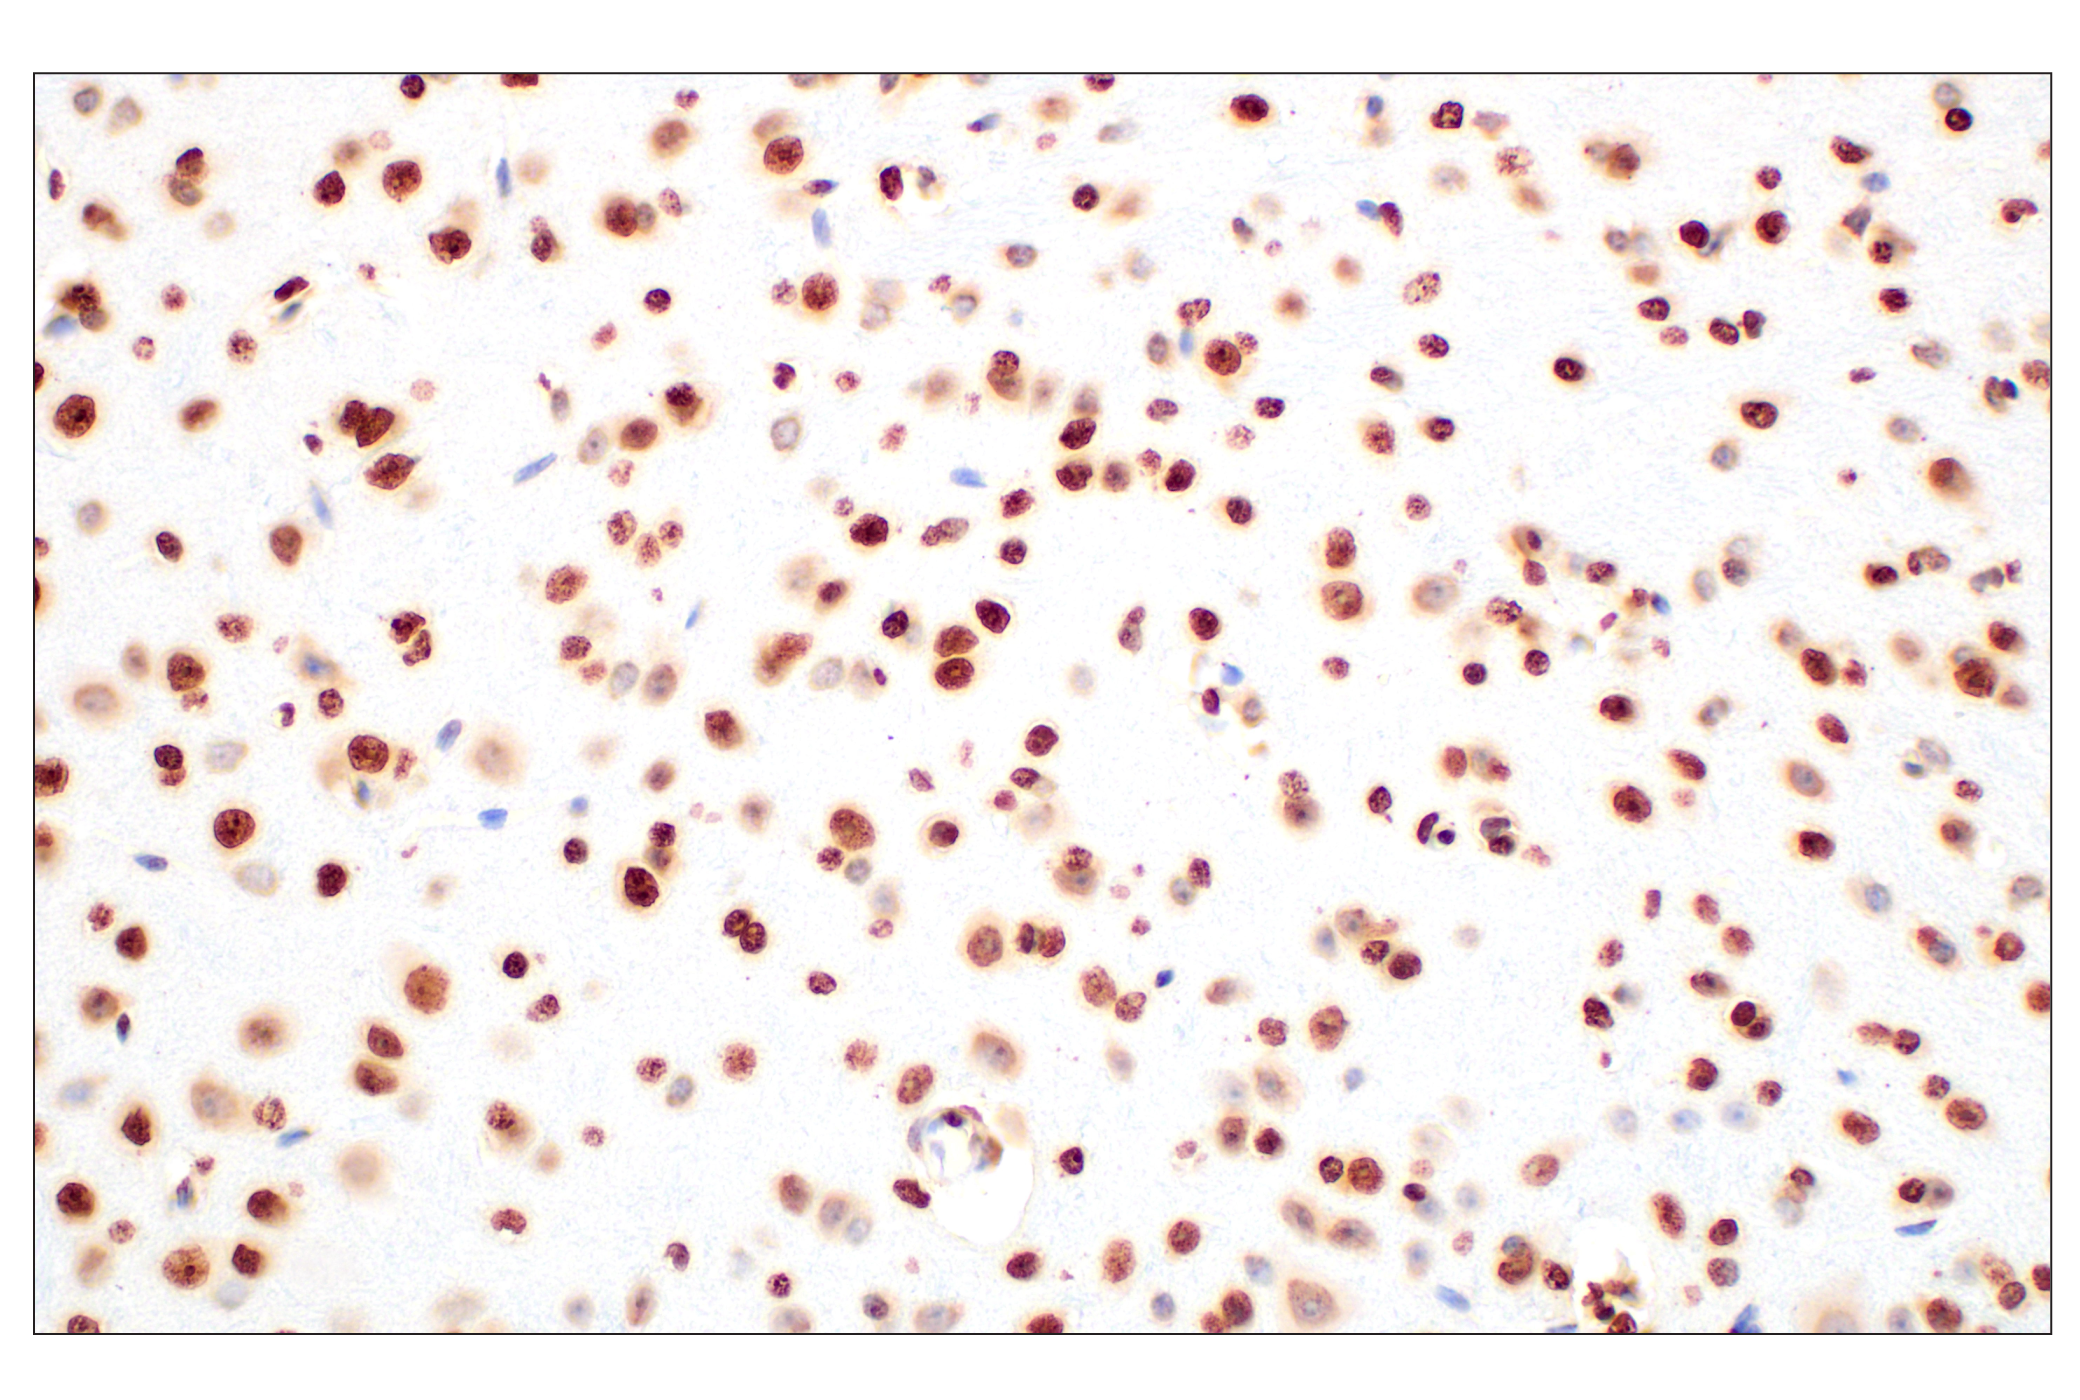  Image 30: Acetyl-Histone Antibody Sampler Kit